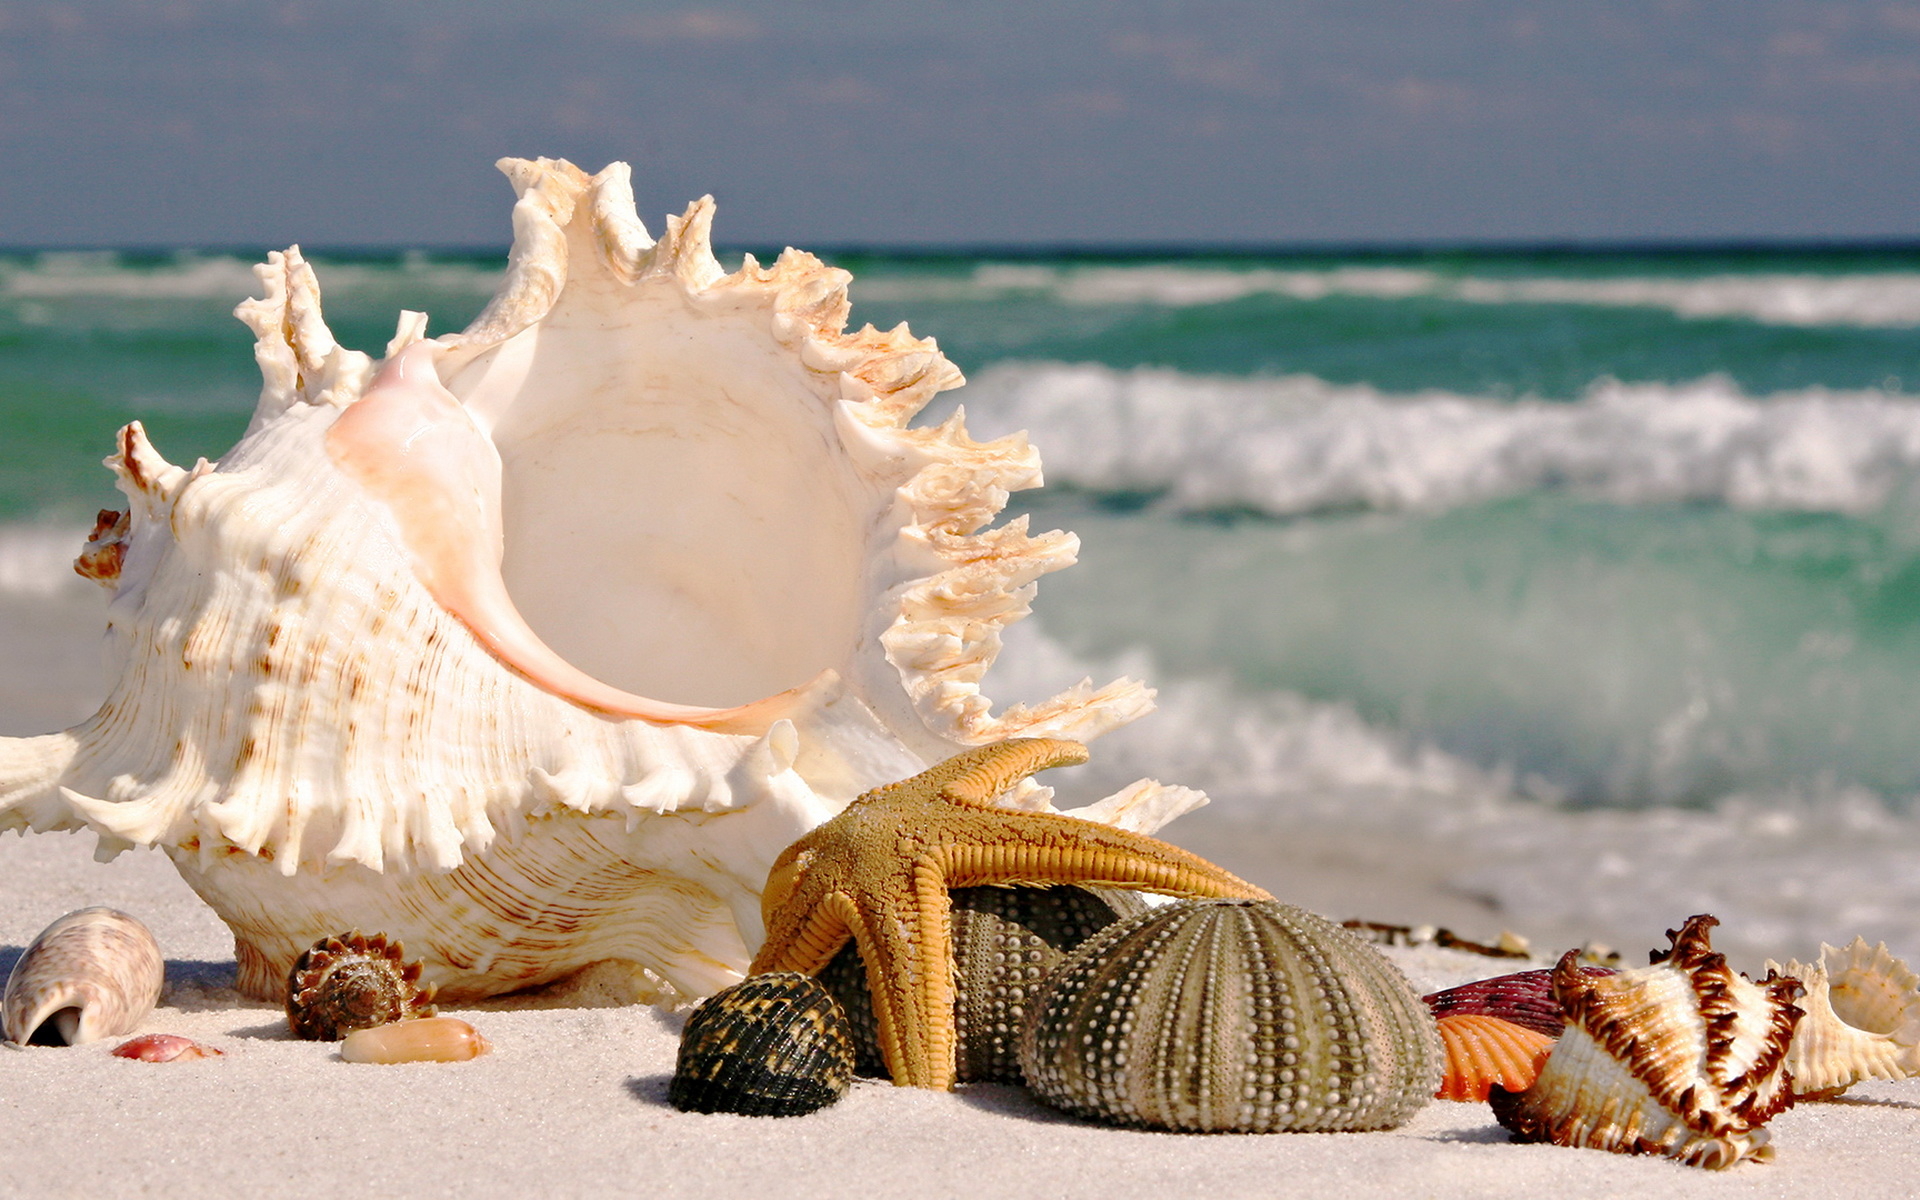 Seashells On Summer Beach Sand Background Stock Photo 426354493   Shutterstock